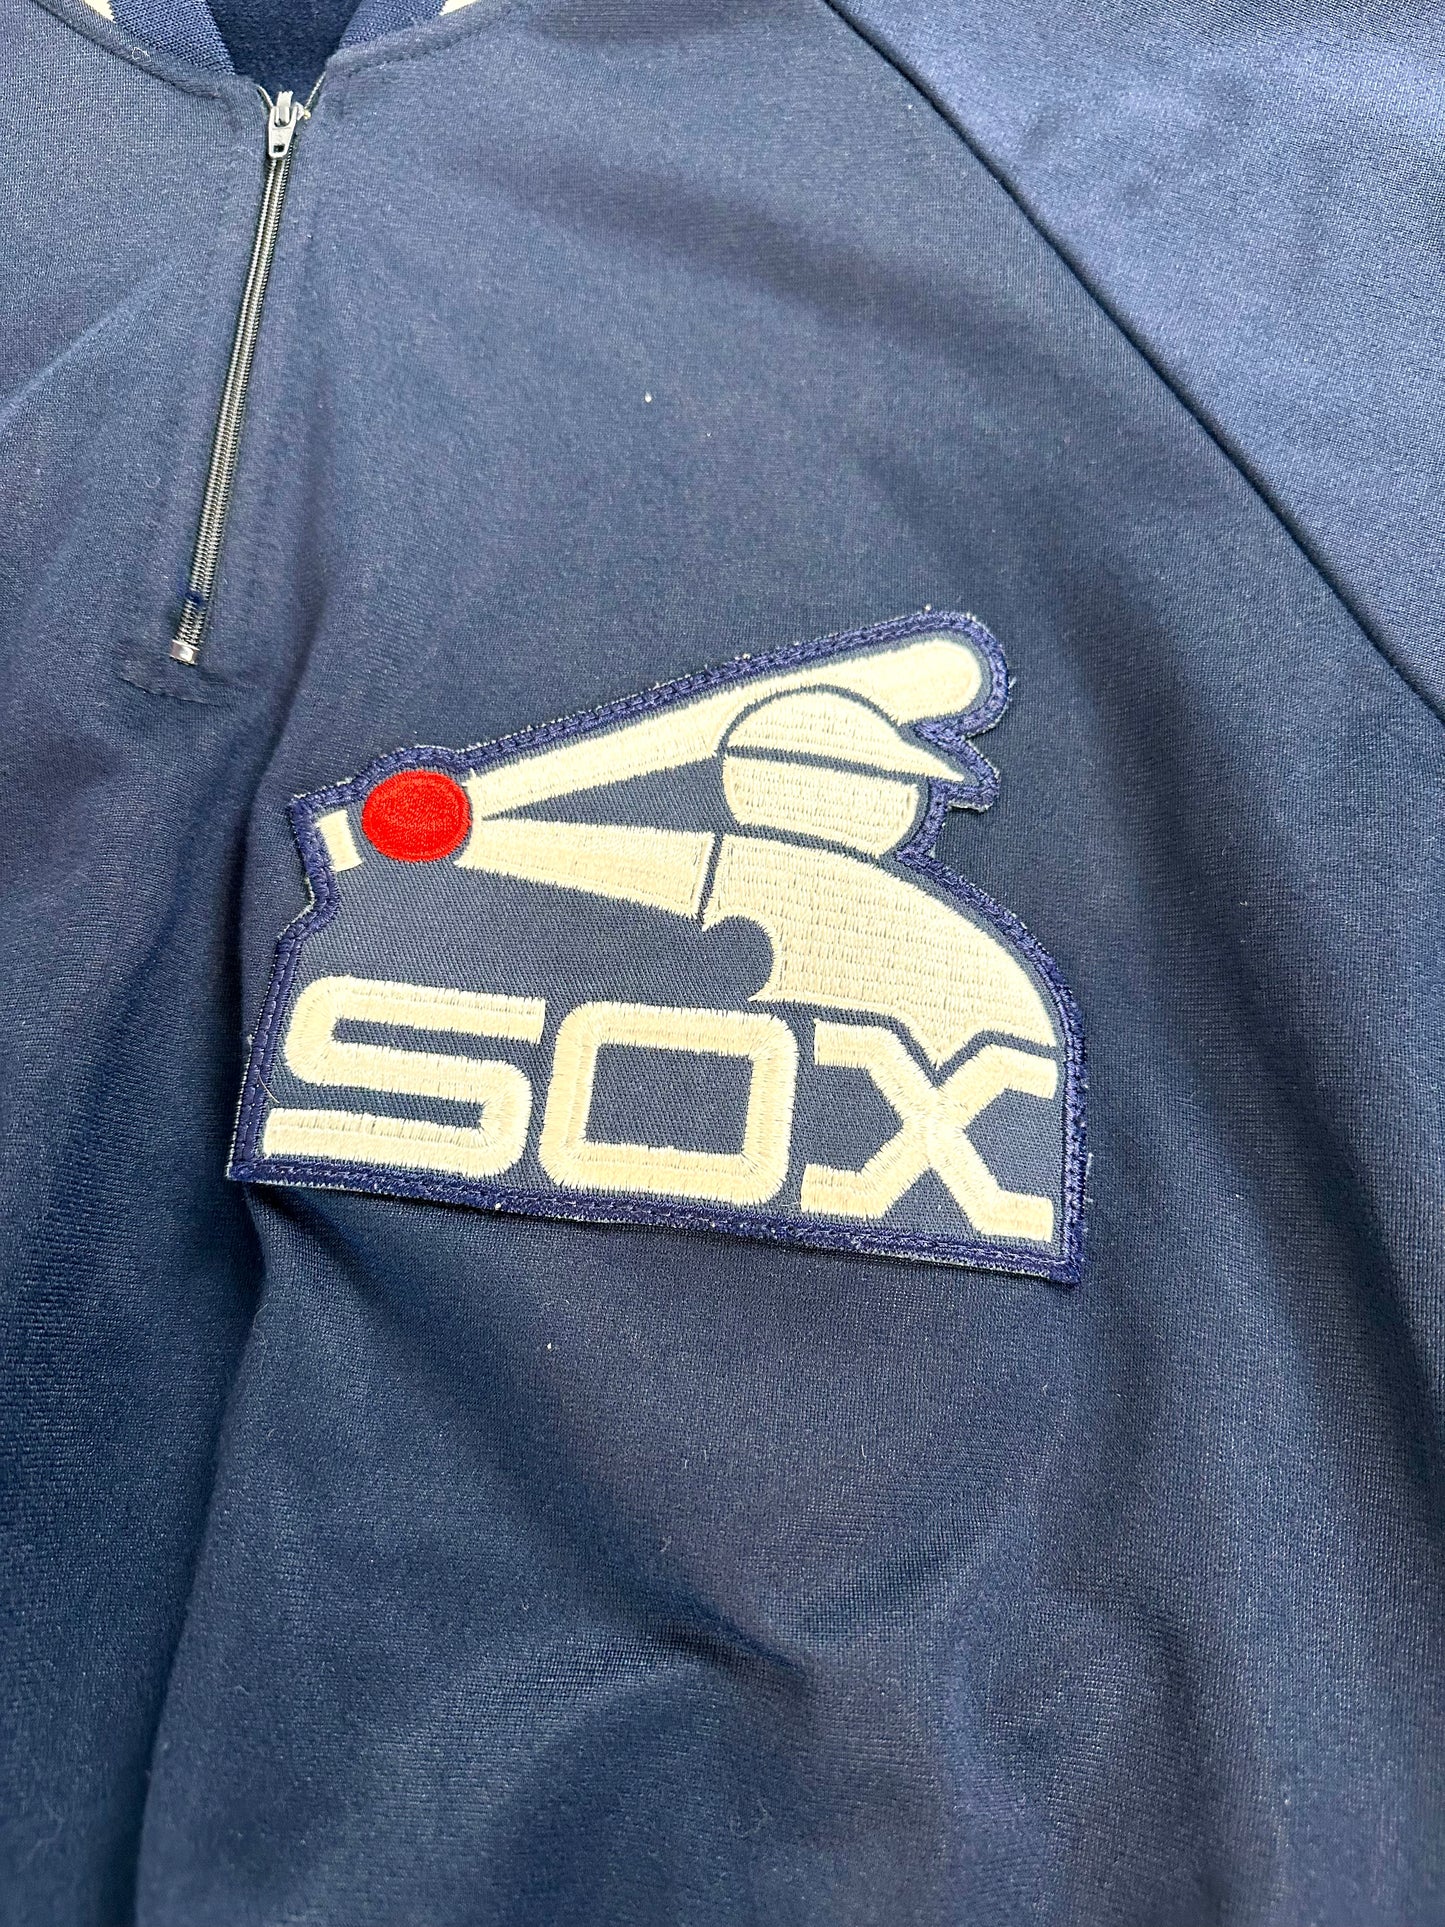 Chicago White Sox Mid-80s Ozzie Guillen Batting Practice Jacket (XL)